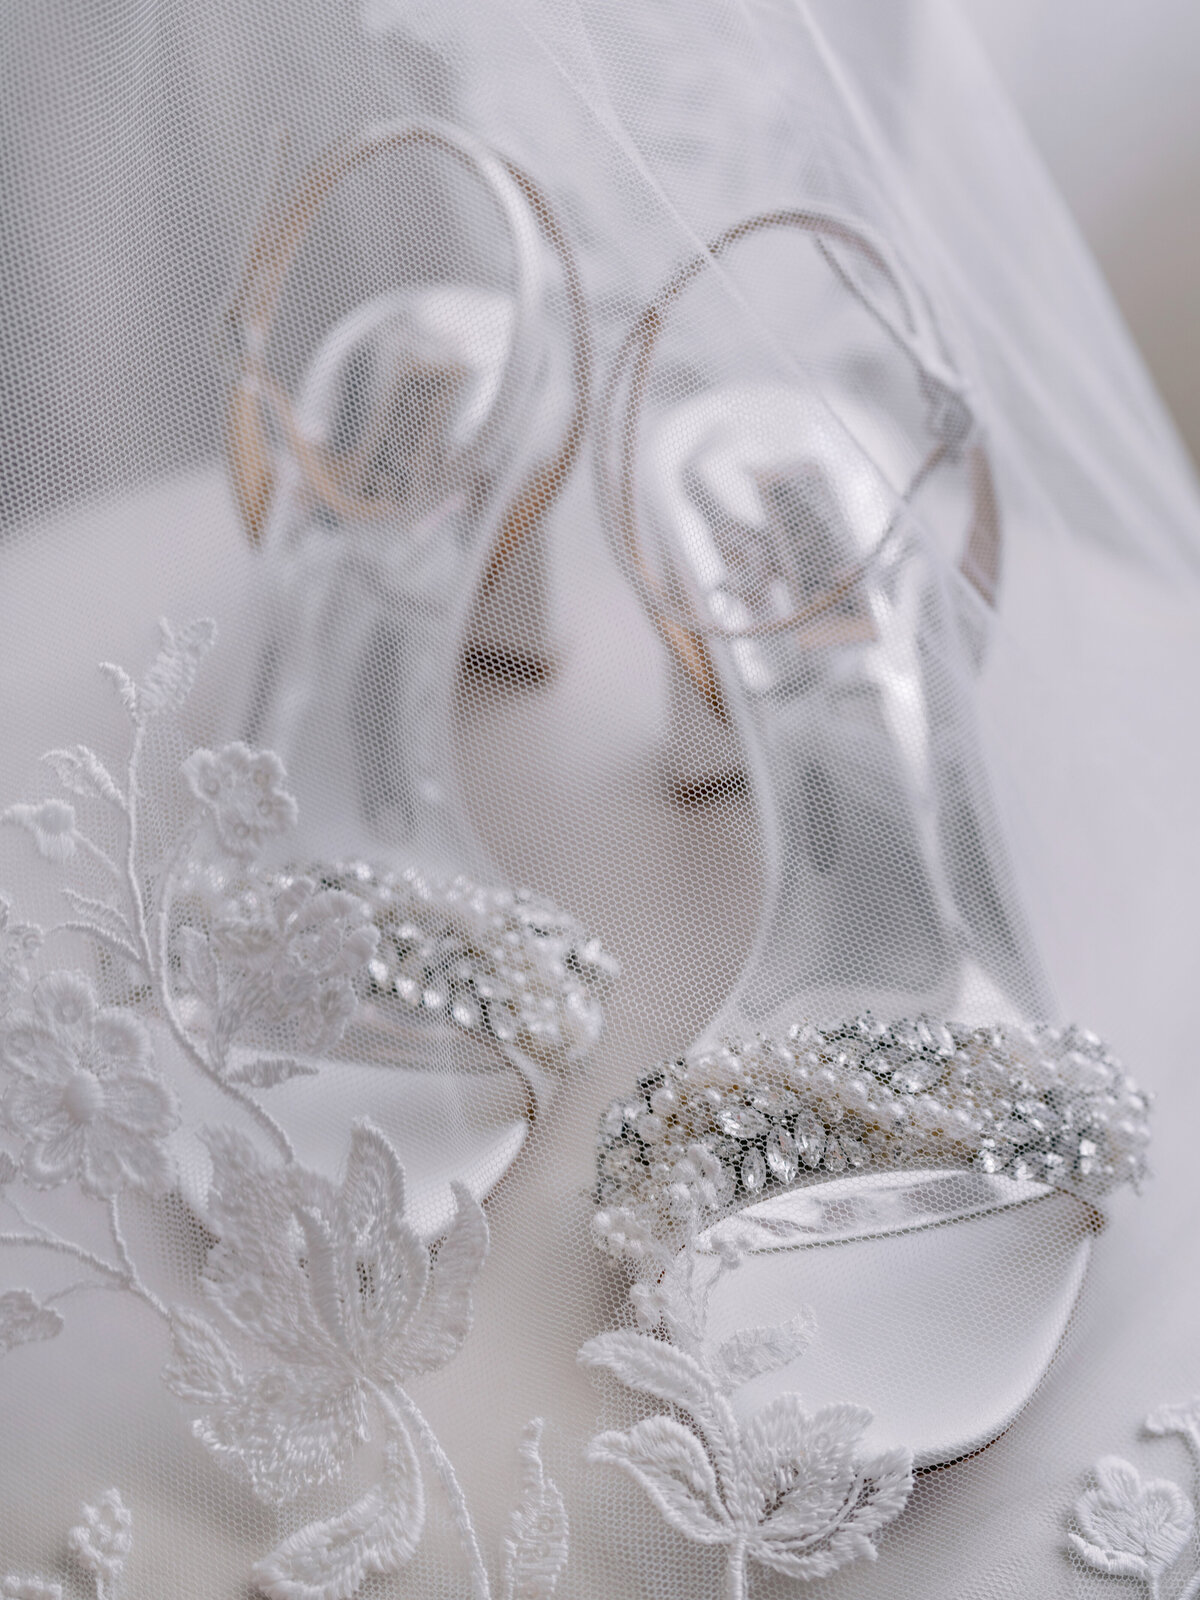 wedding_shoes